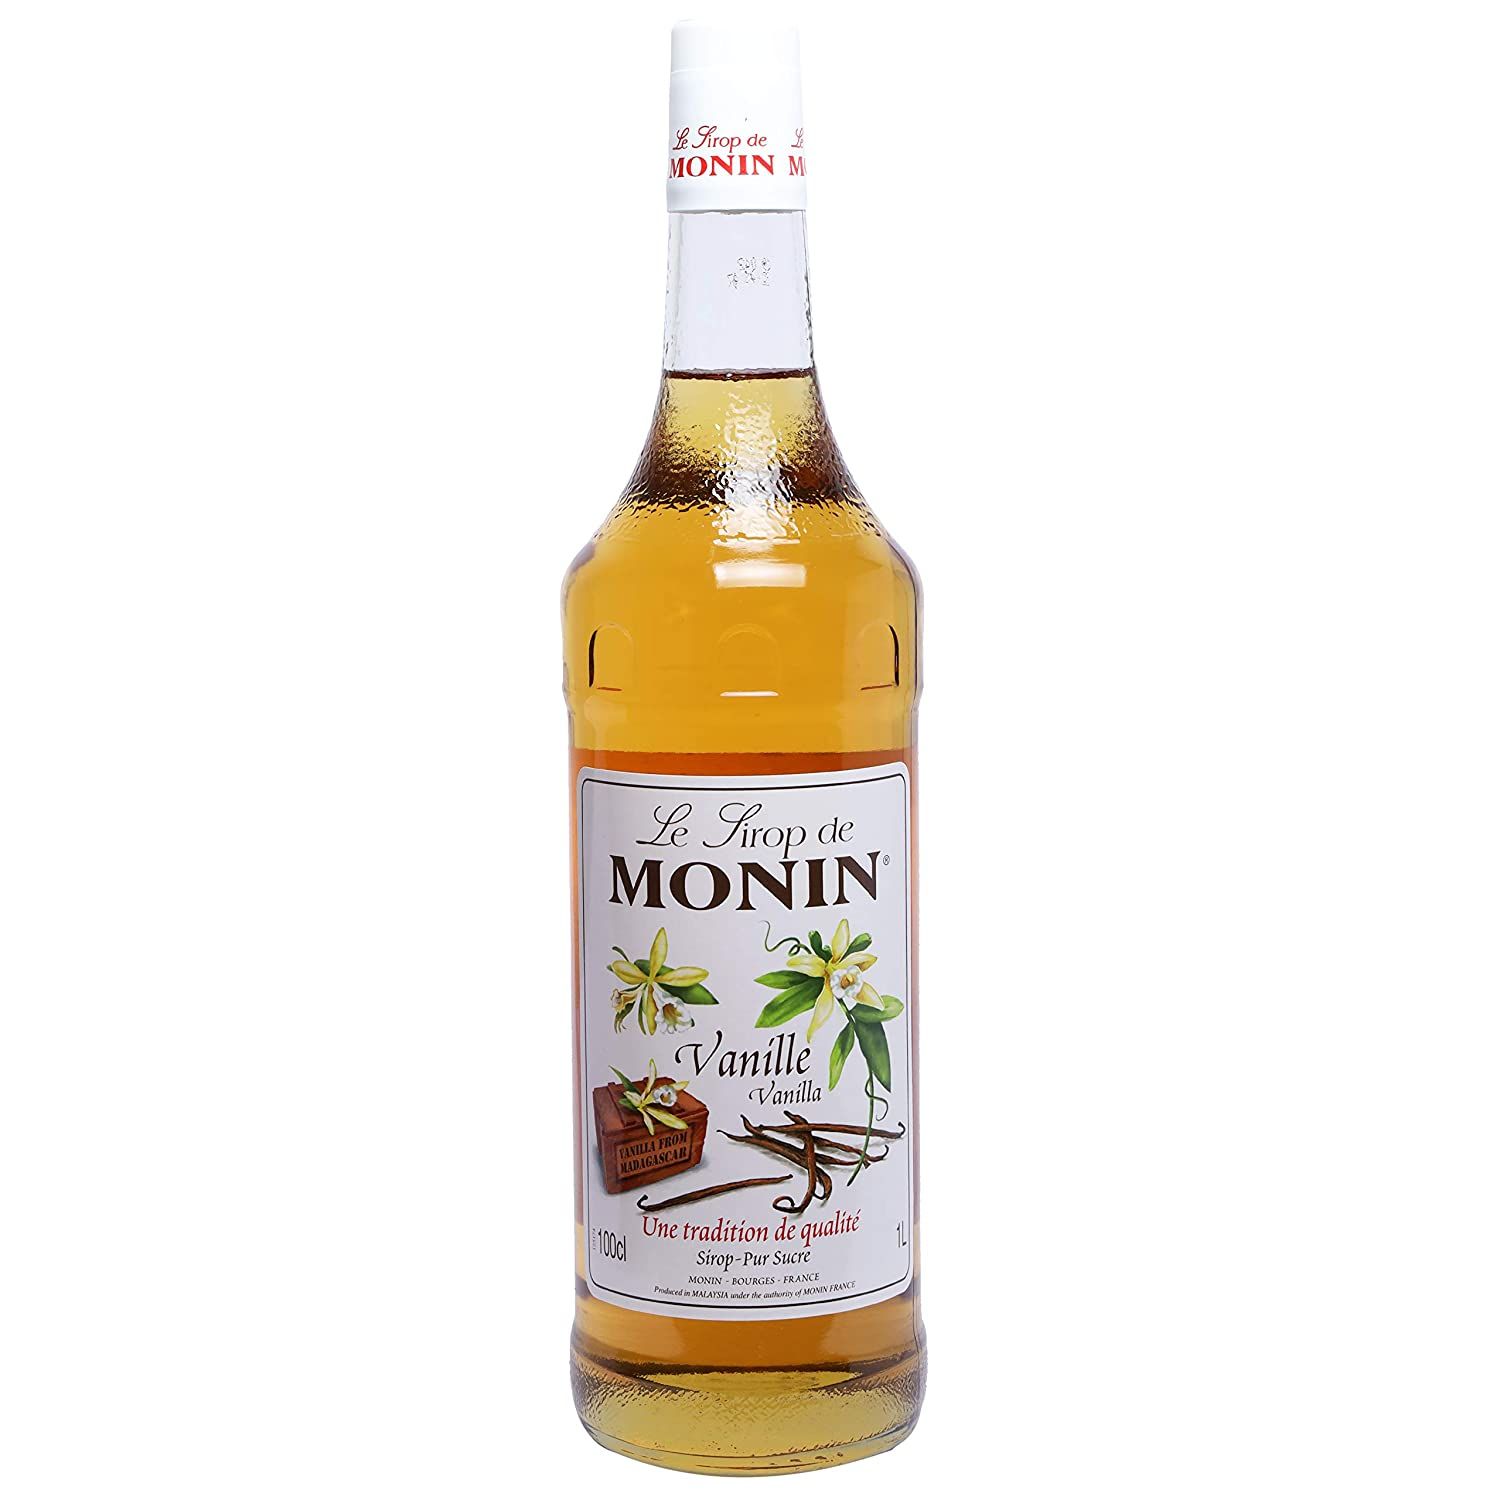 Monin Vanilla Flavored Syrup Image